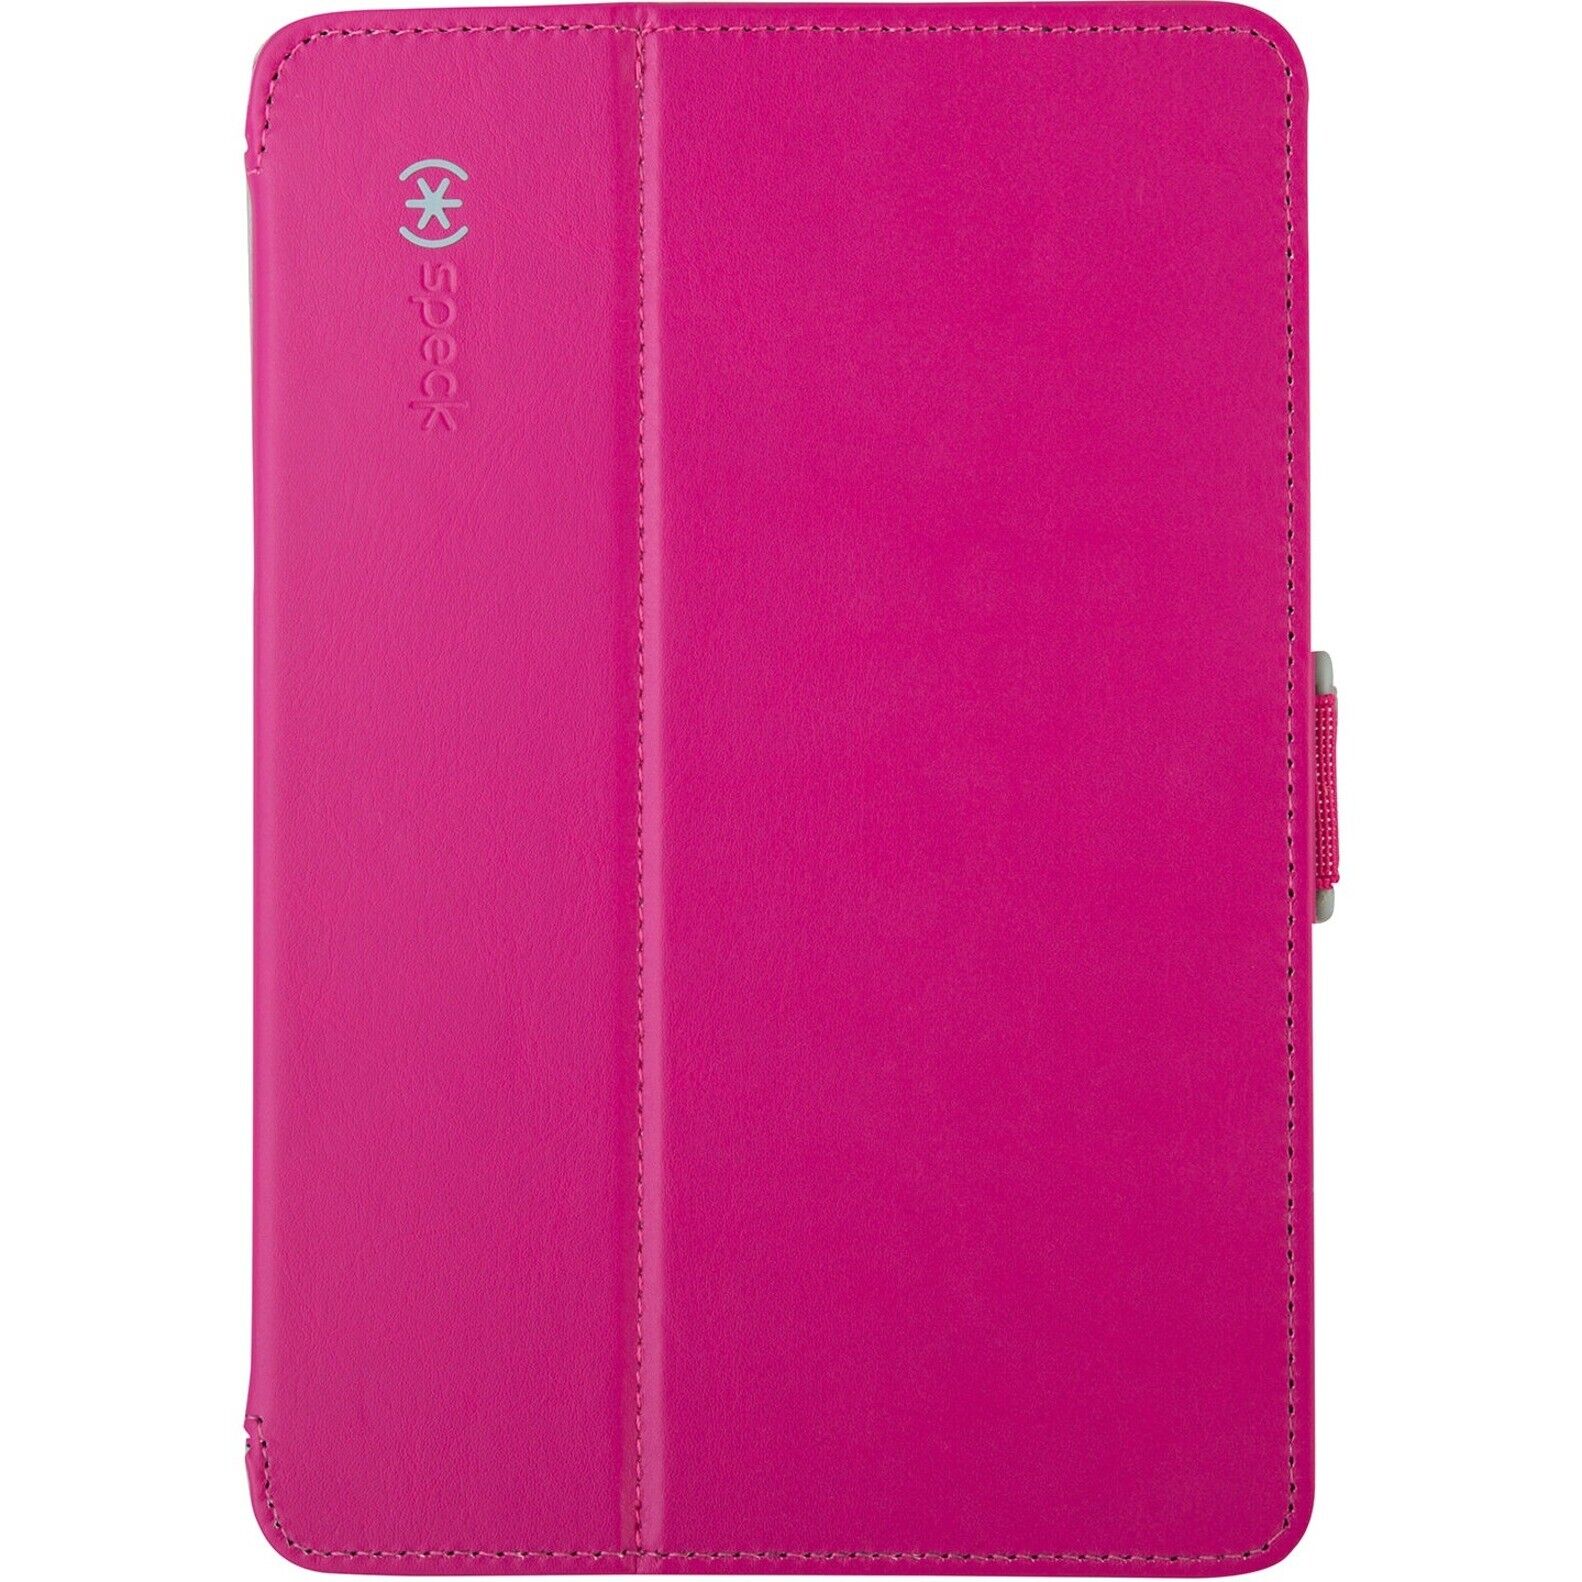 Speck Products Stylefolio Case For Ipad Mini/2/3 - Fuchsia Pink/nickel Grey